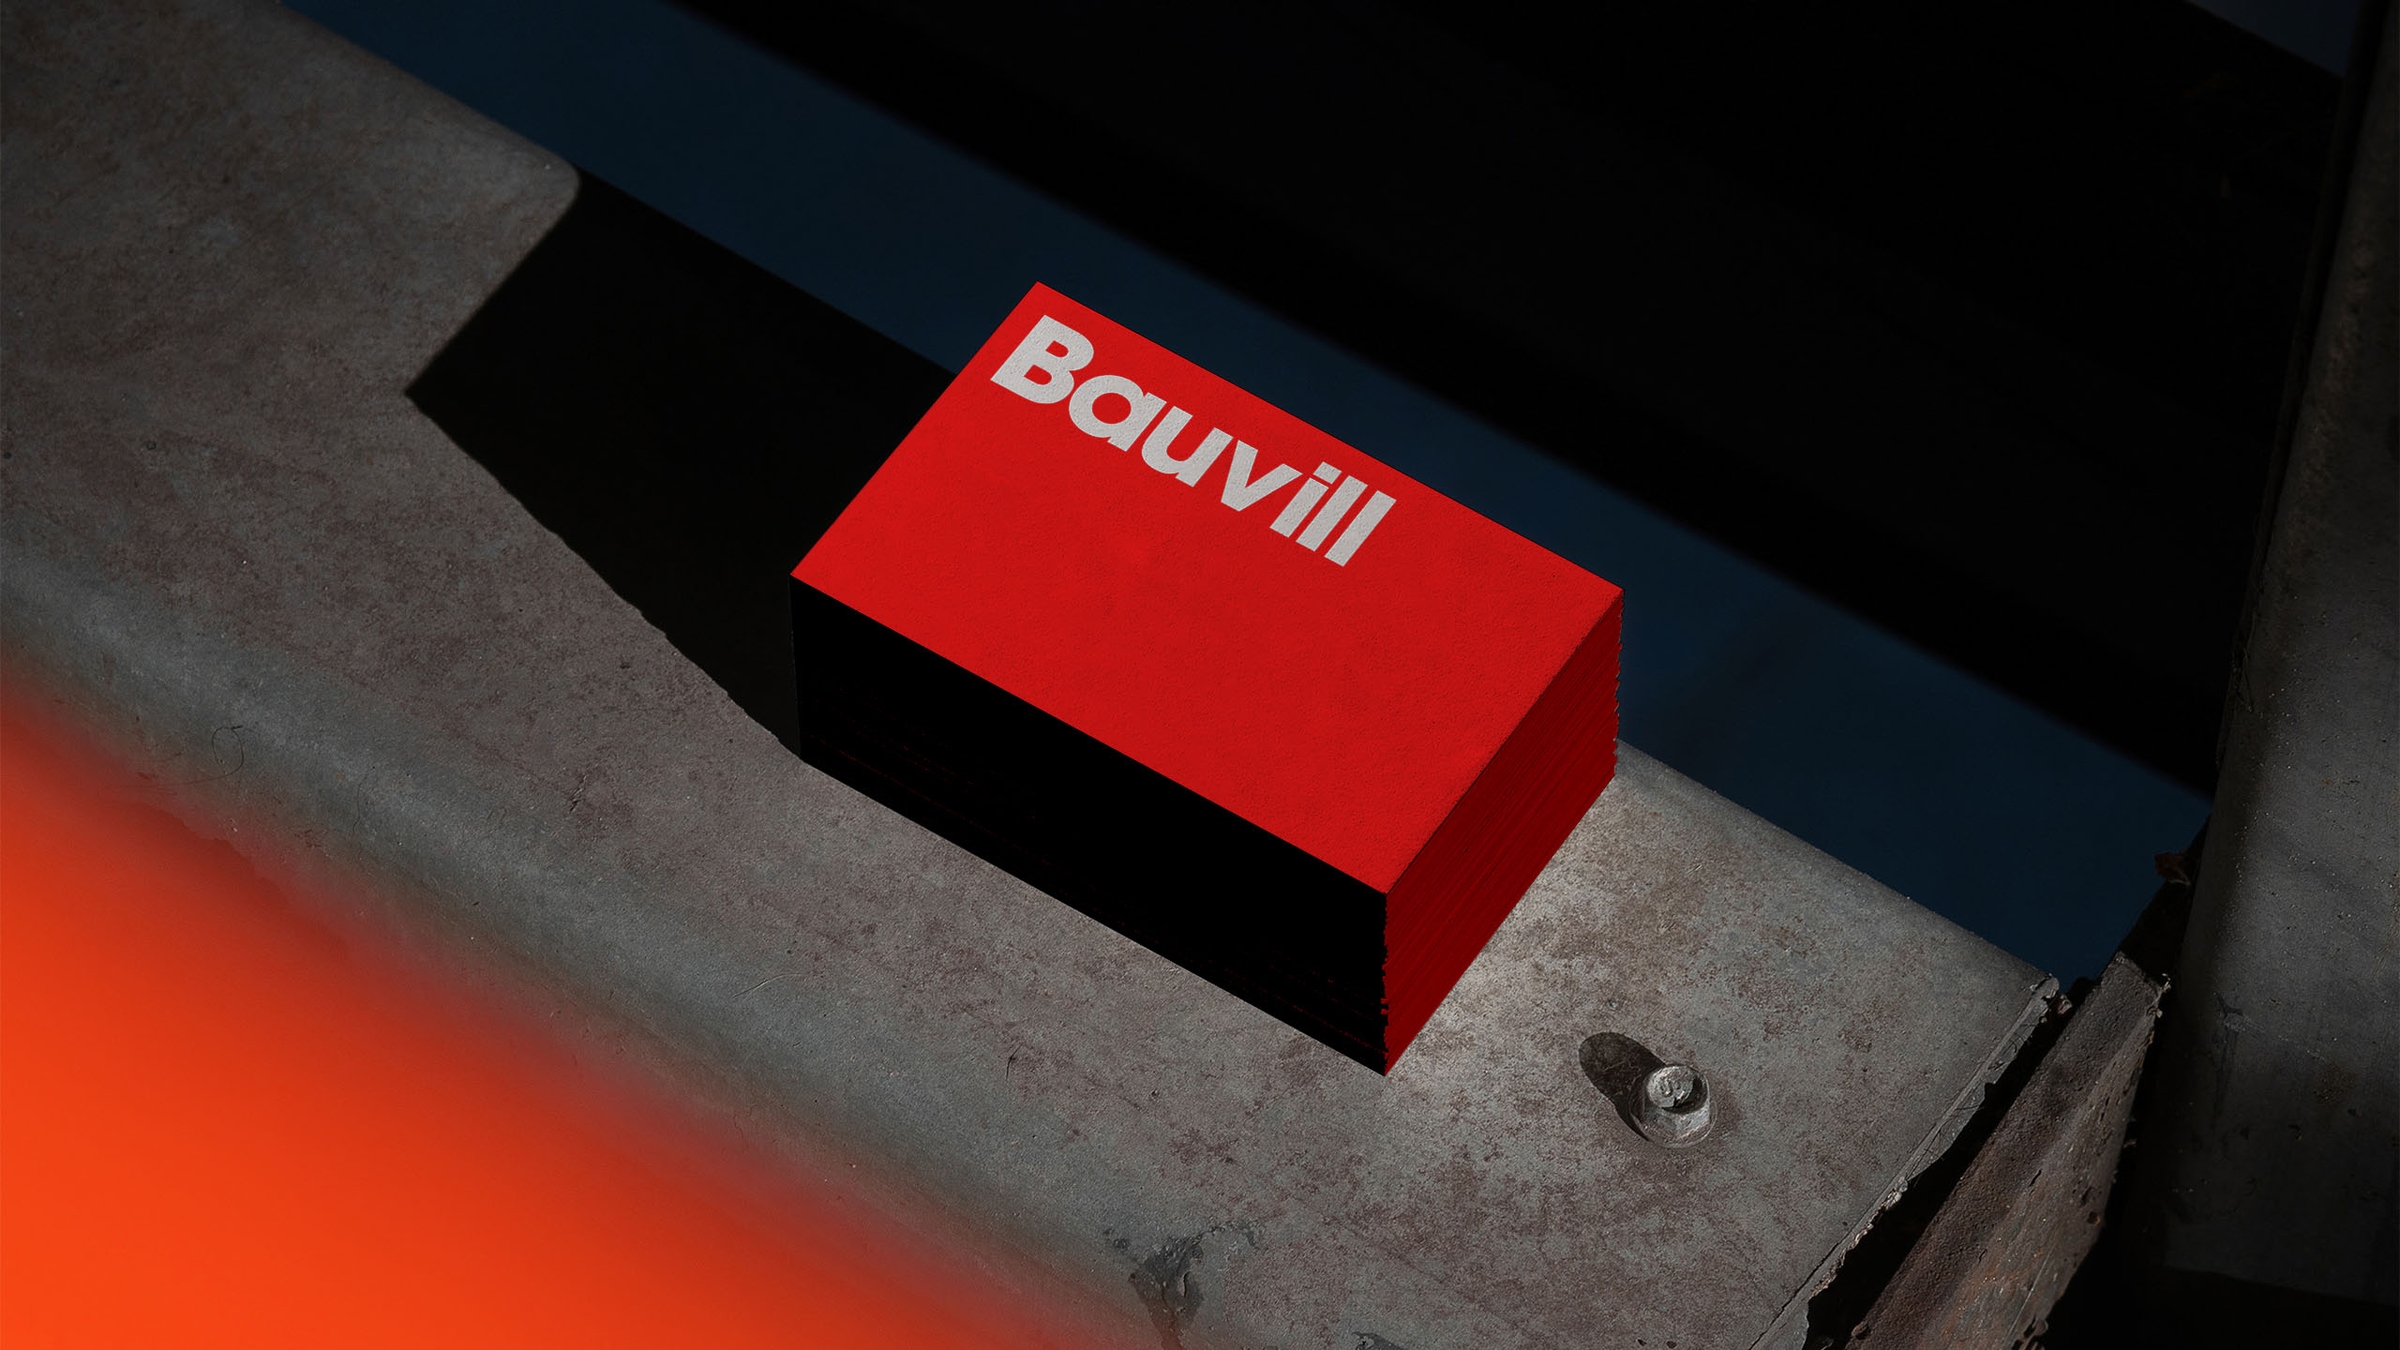 Bauvill Construction